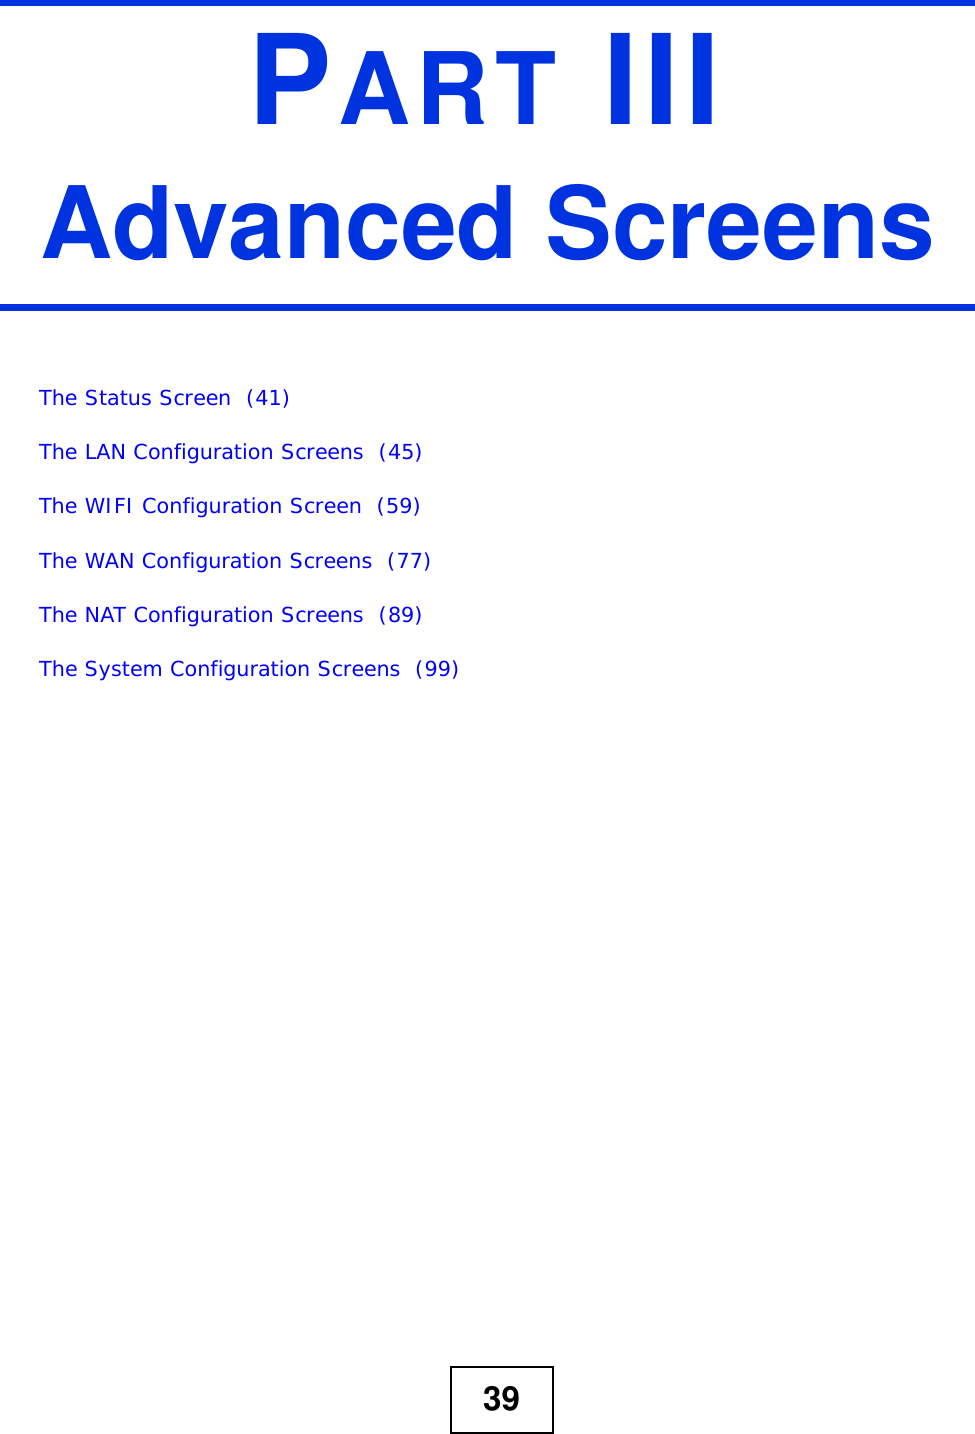 39PART IIIAdvanced ScreensThe Status Screen  (41)The LAN Configuration Screens  (45)The WIFI Configuration Screen  (59)The WAN Configuration Screens  (77)The NAT Configuration Screens  (89)The System Configuration Screens  (99)